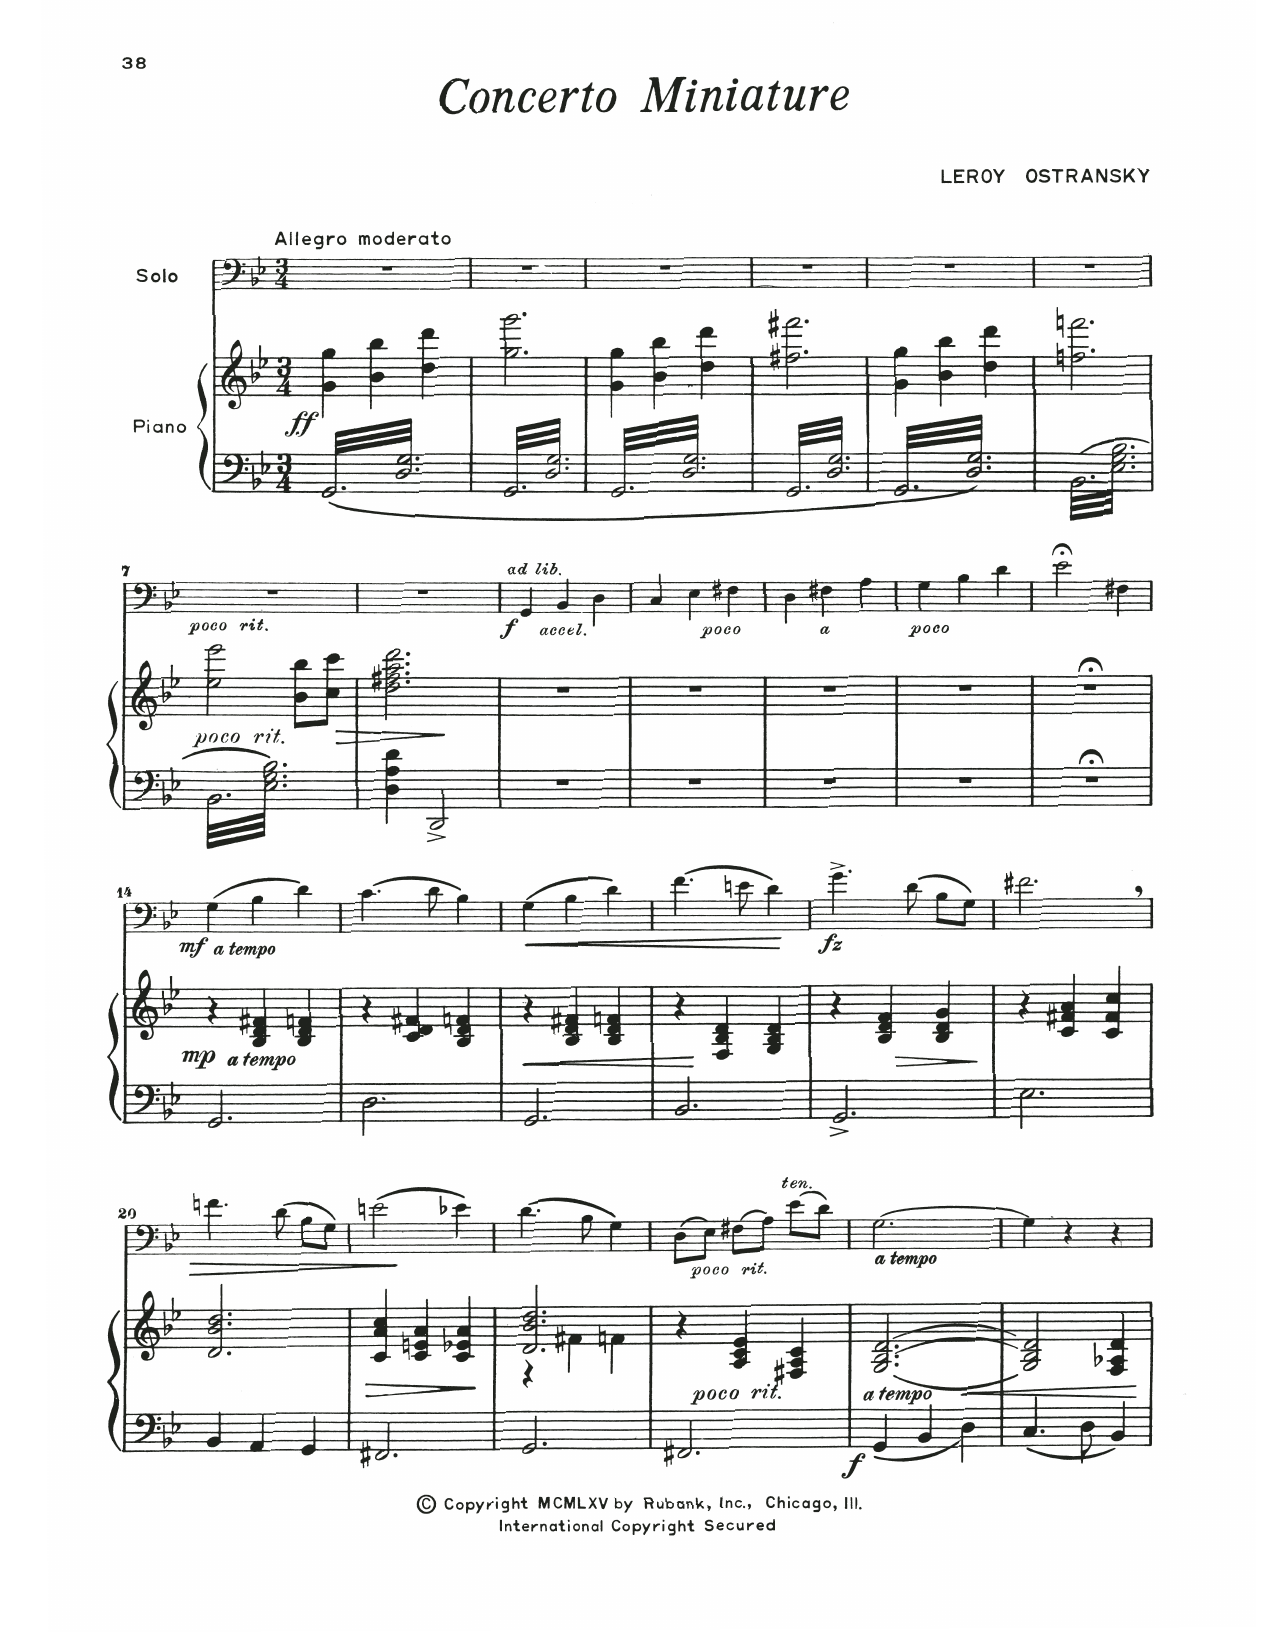 Download Leroy Ostransky Concerto Miniature Sheet Music